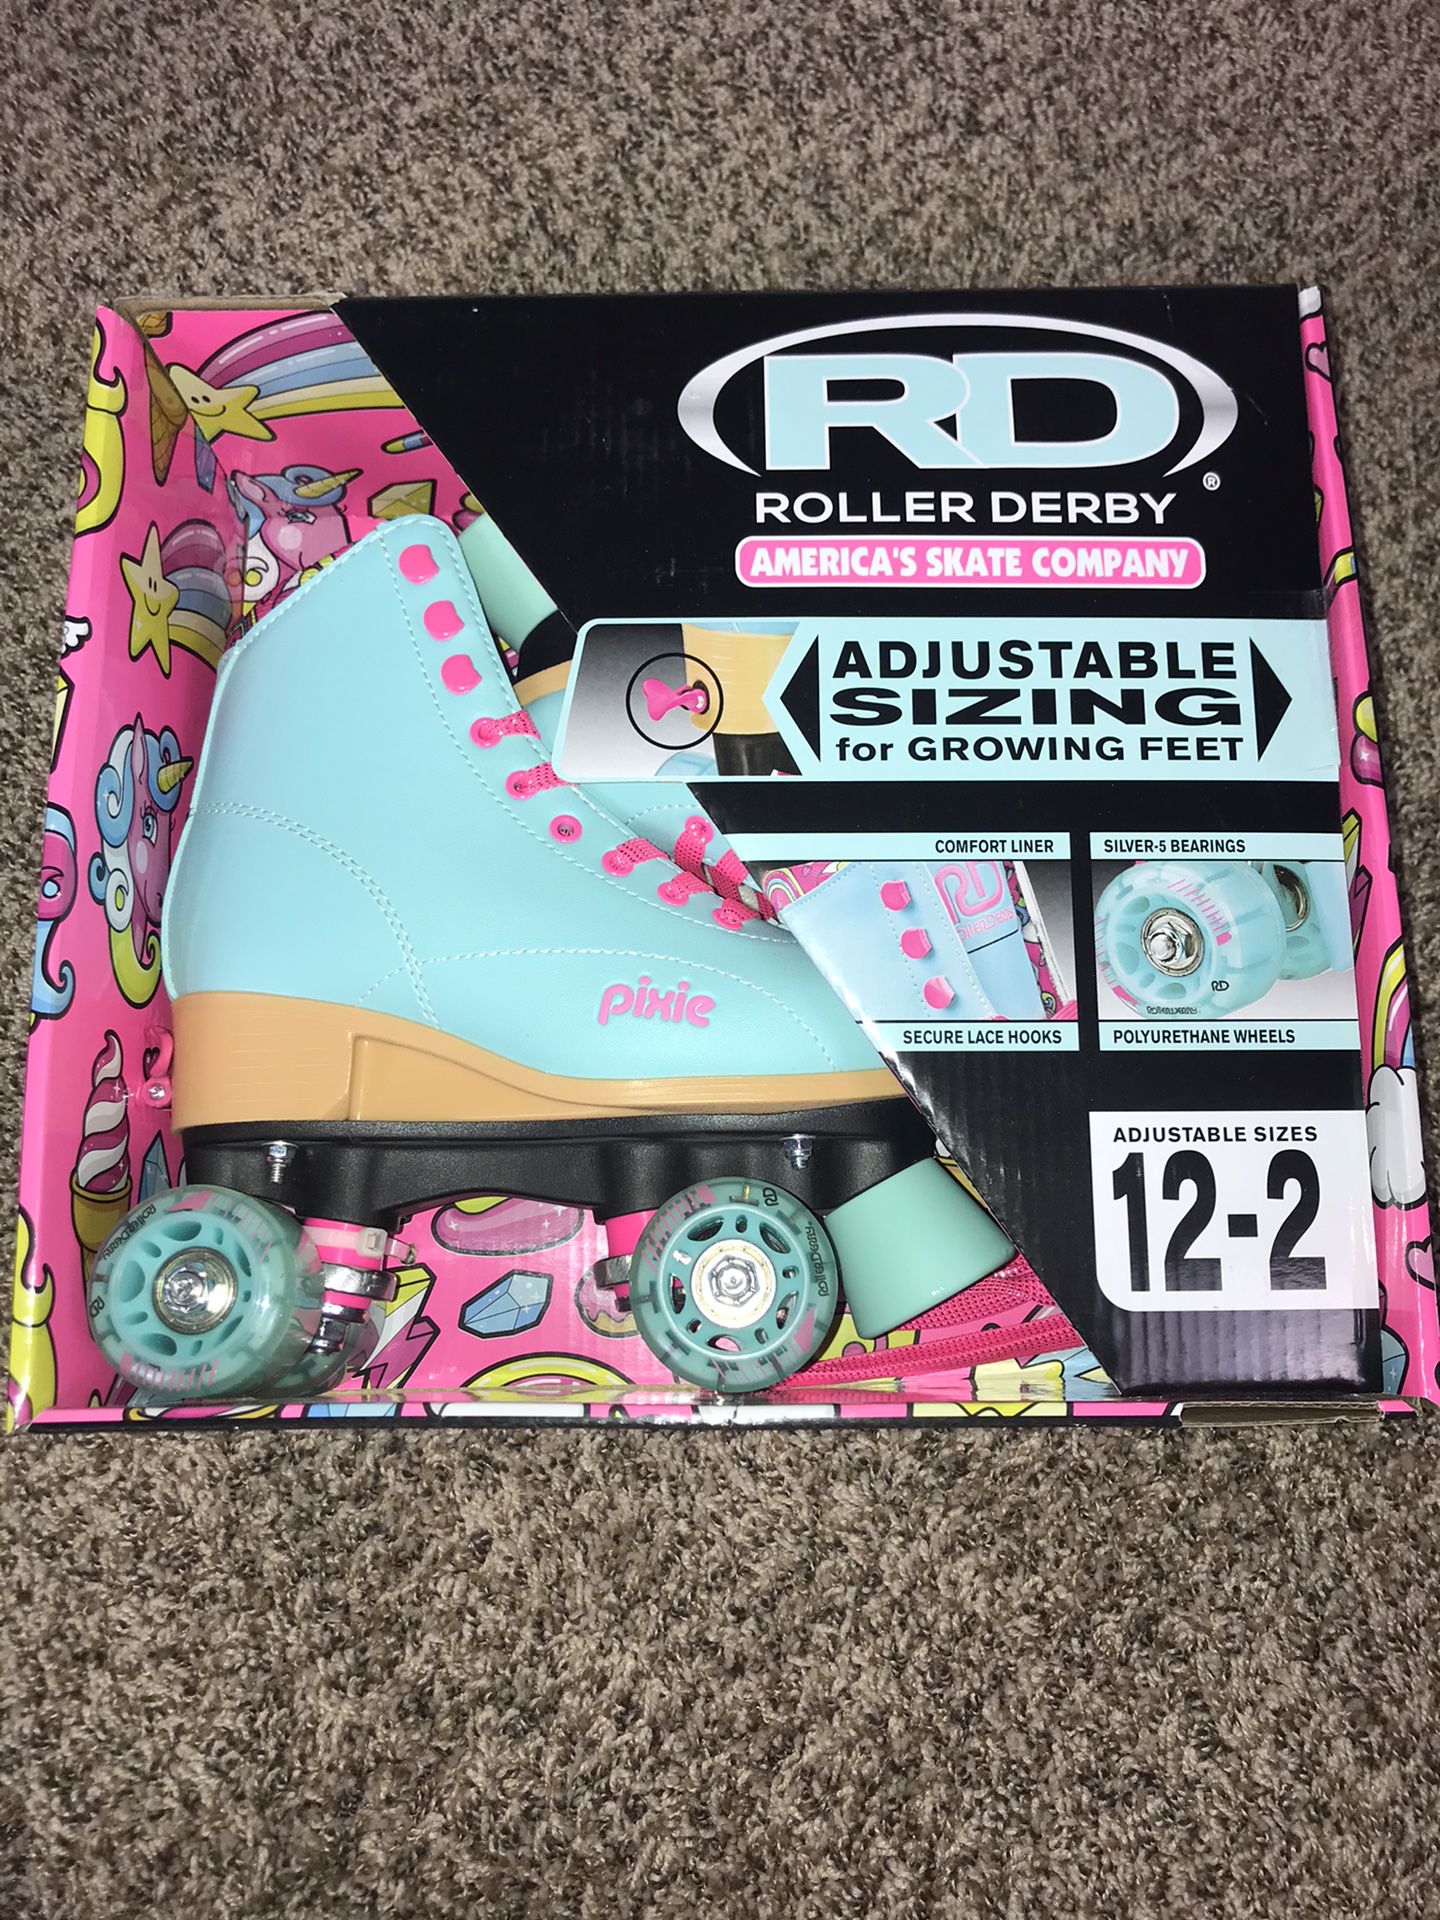 Roller Derby Girls Pixie Adjustable Fashion Roller Skates (Size Small 12-2)Teal